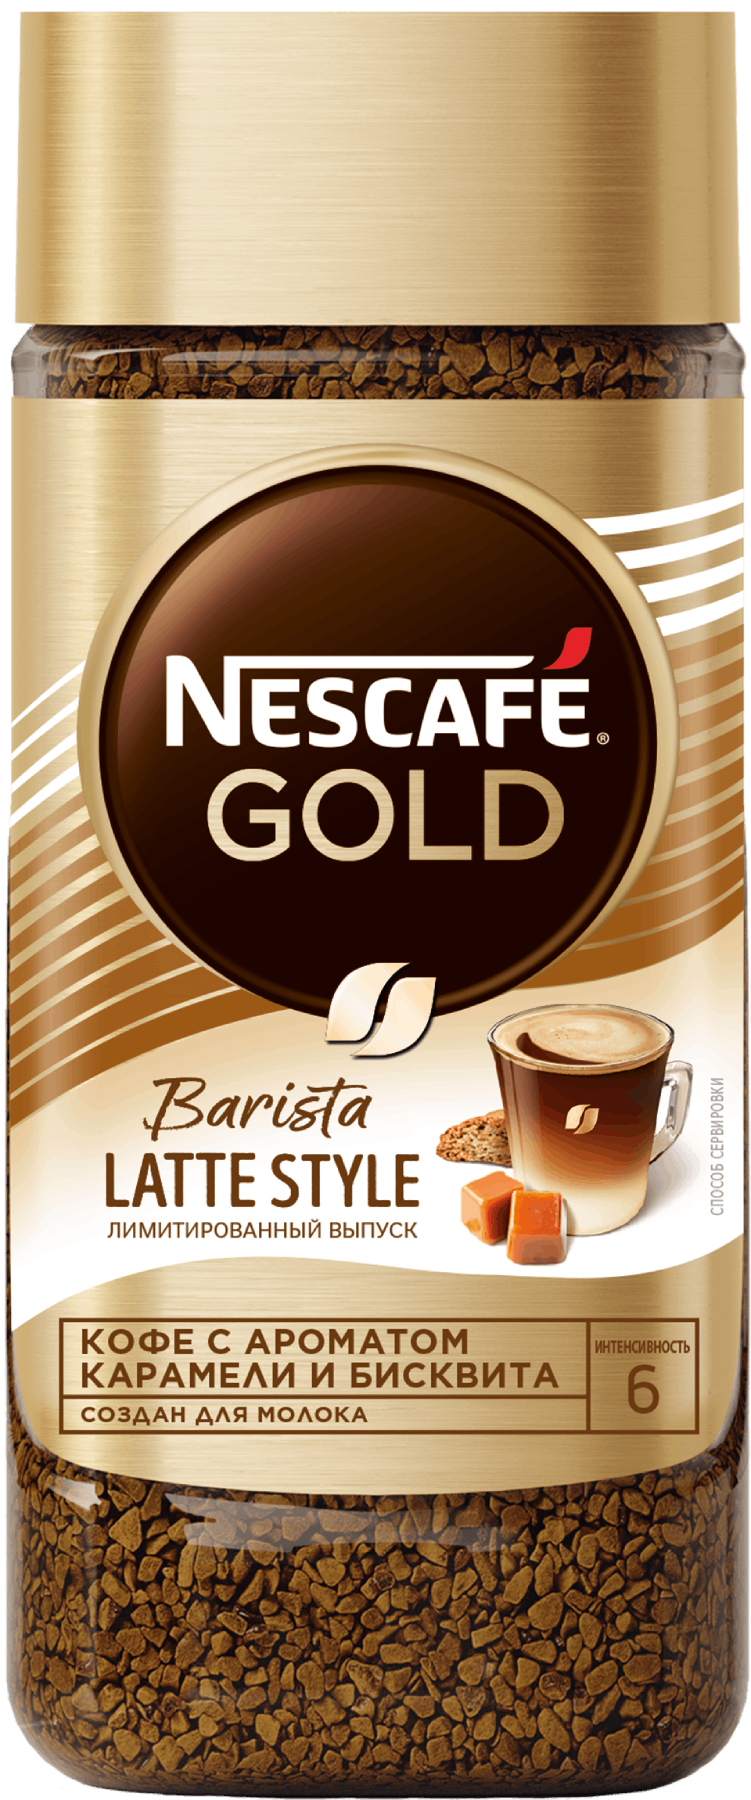 Nescafe Gold Barista Latte